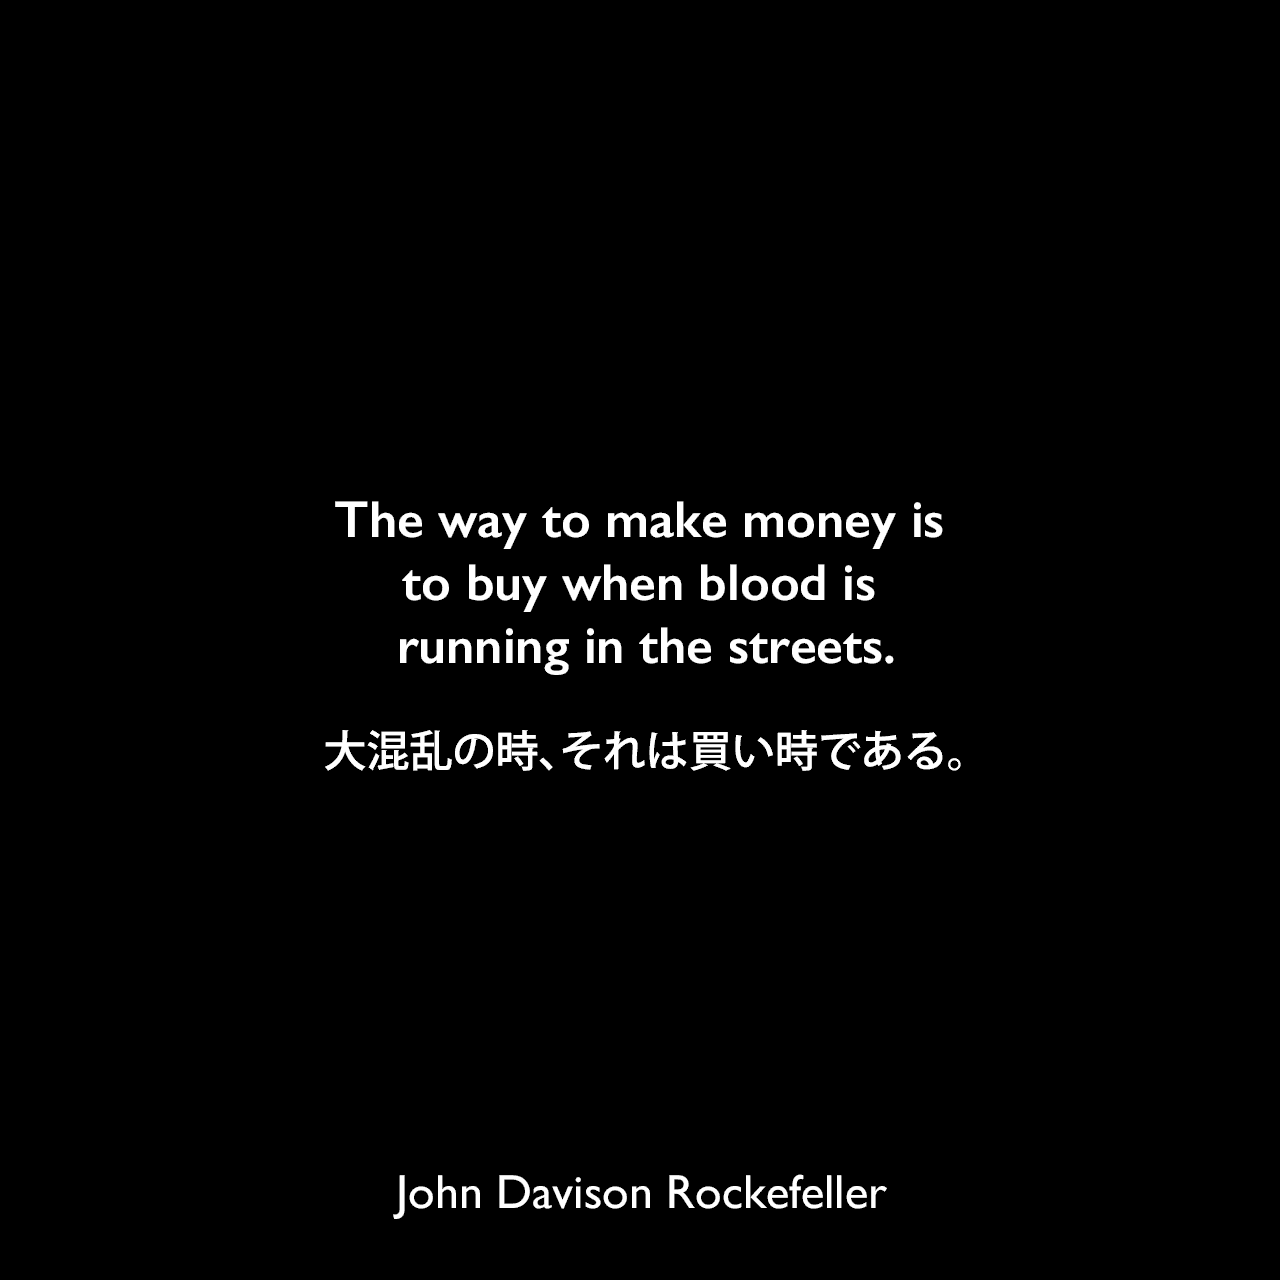 The way to make money is to buy when blood is running in the streets.大混乱の時、それは買い時である。John Davison Rockefeller